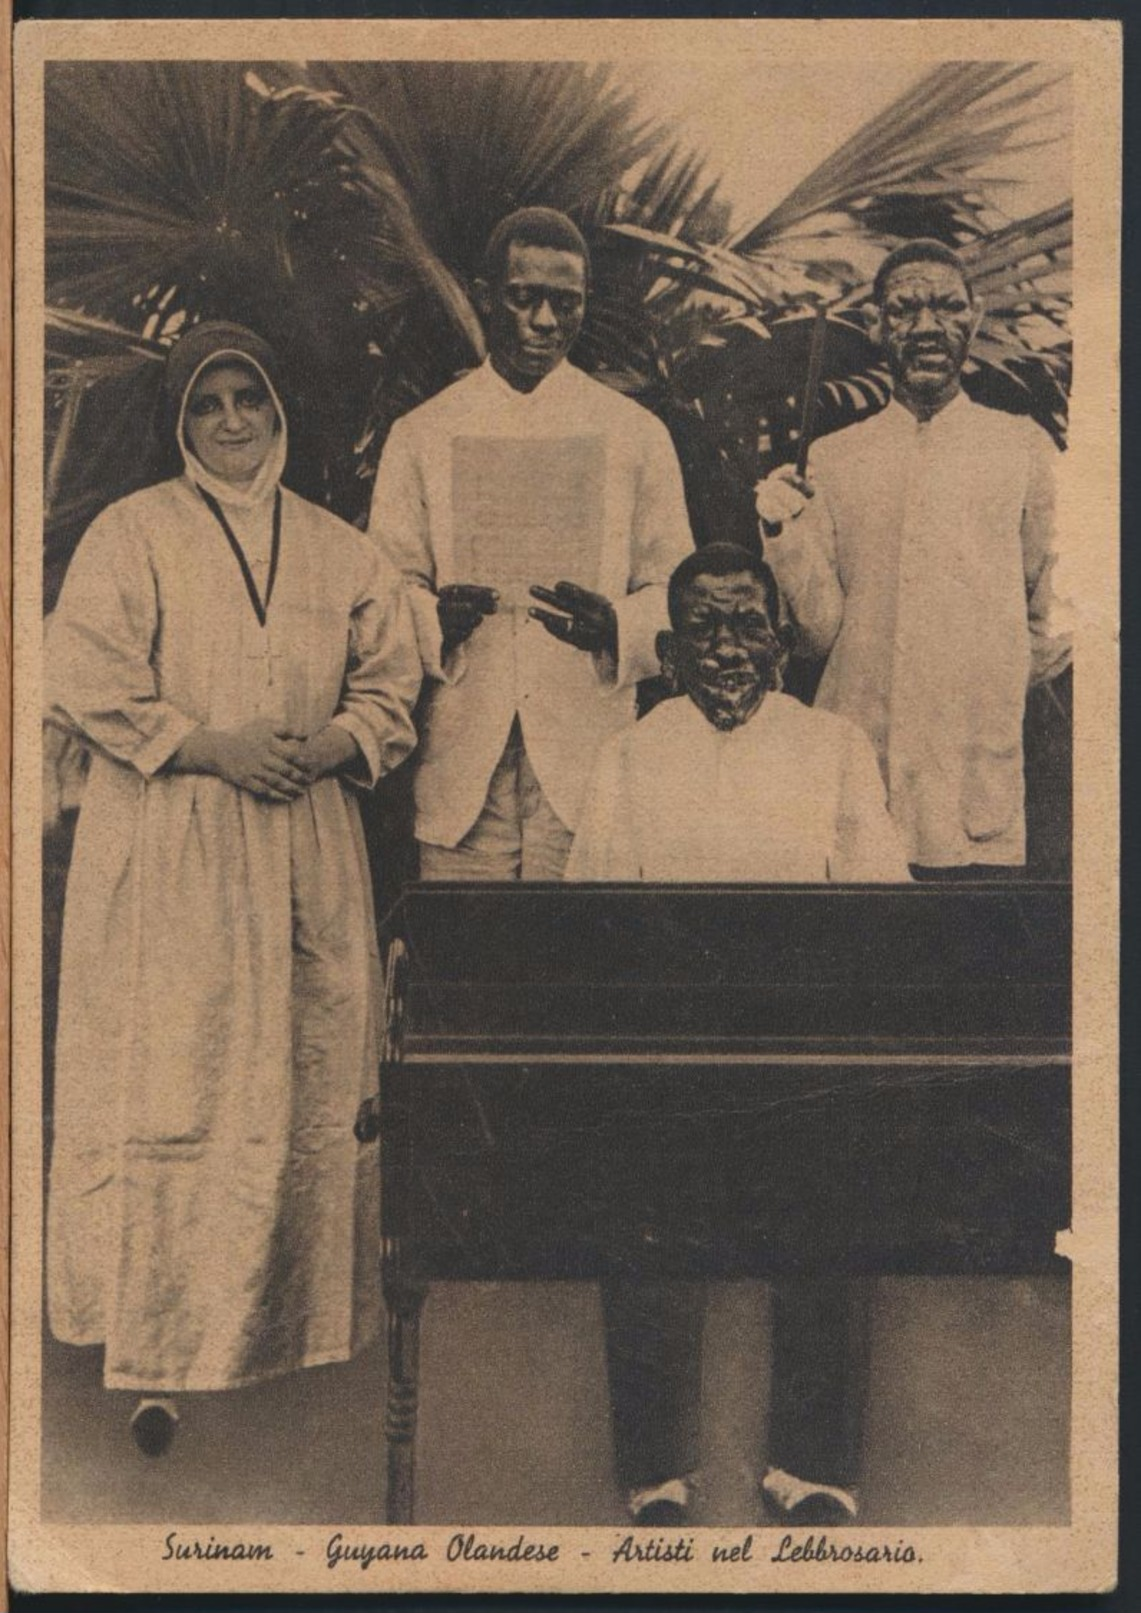 °°° 9152 - SURINAME - GUYANA OLANDESE - ARTISTI NEL LABORATORIO - 1936 °°° - Surinam